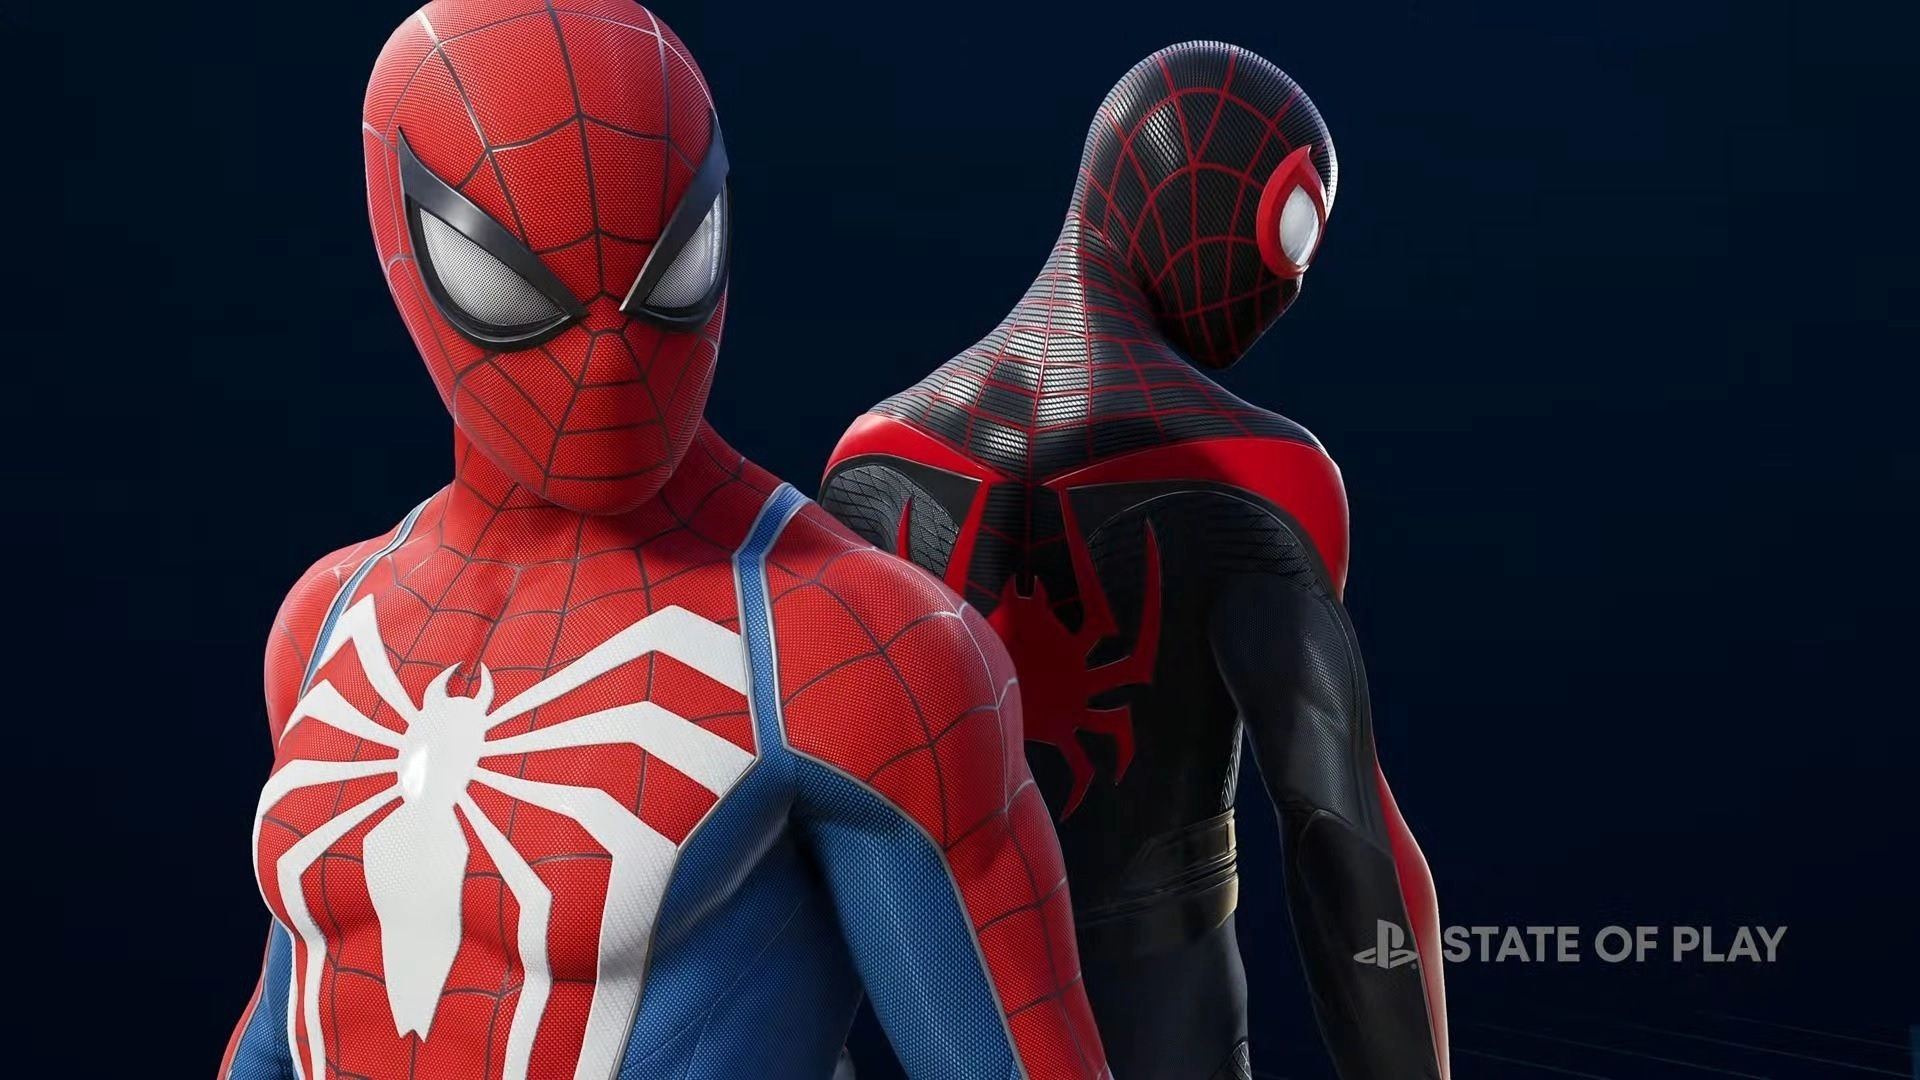 Spider-Man 2 Taps Celebrities for Post-launch Suit Designs